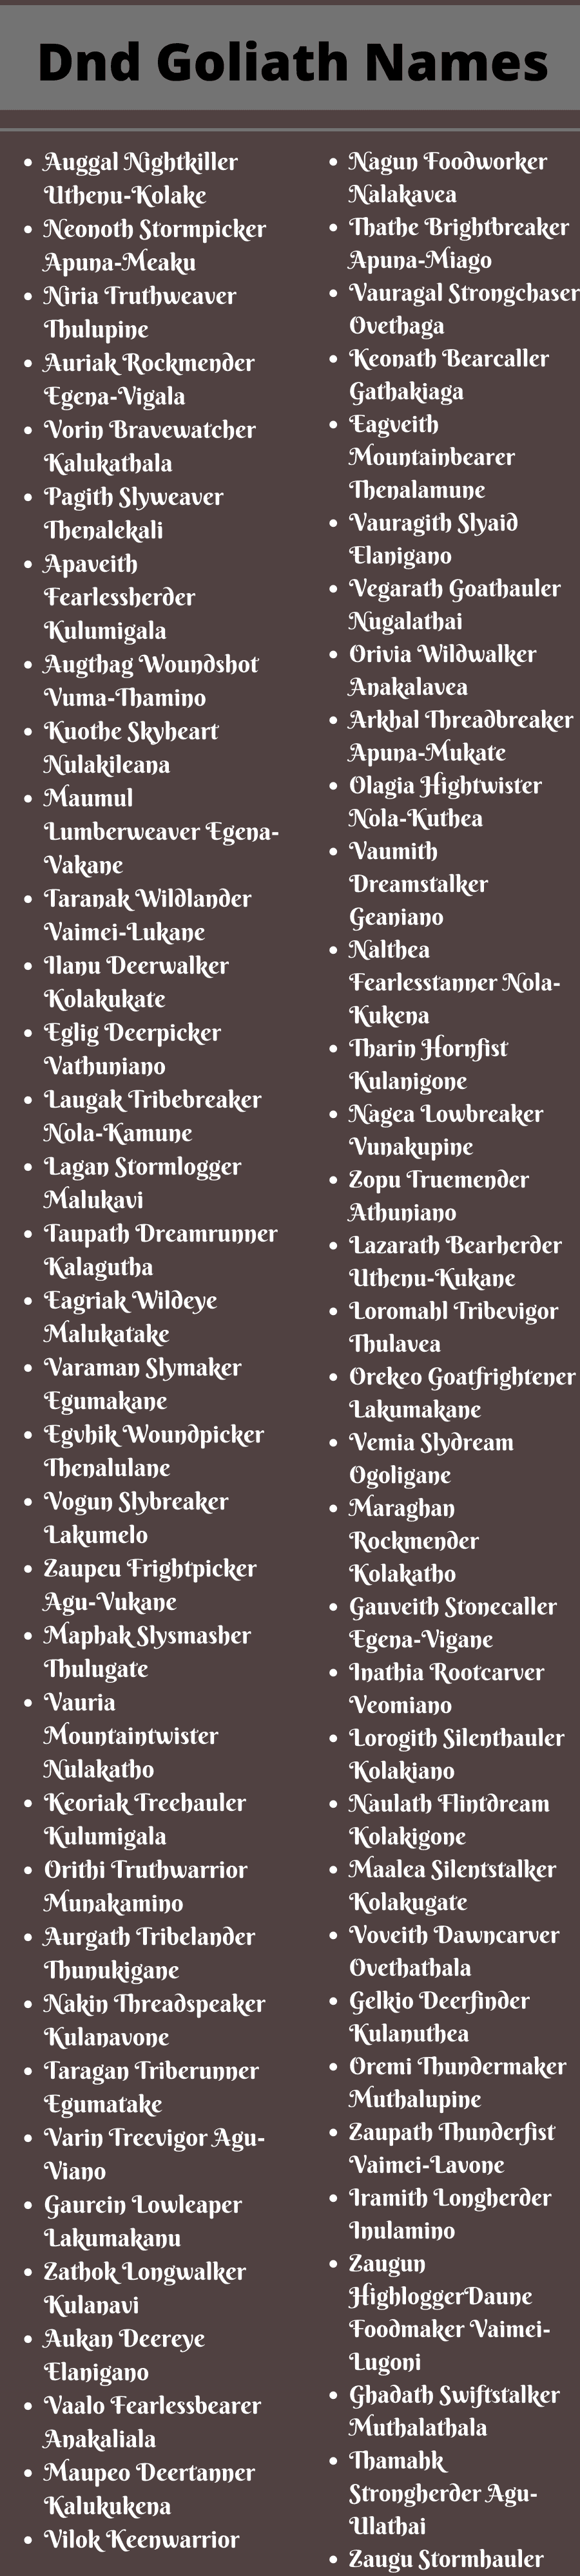 Dnd Goliath Names